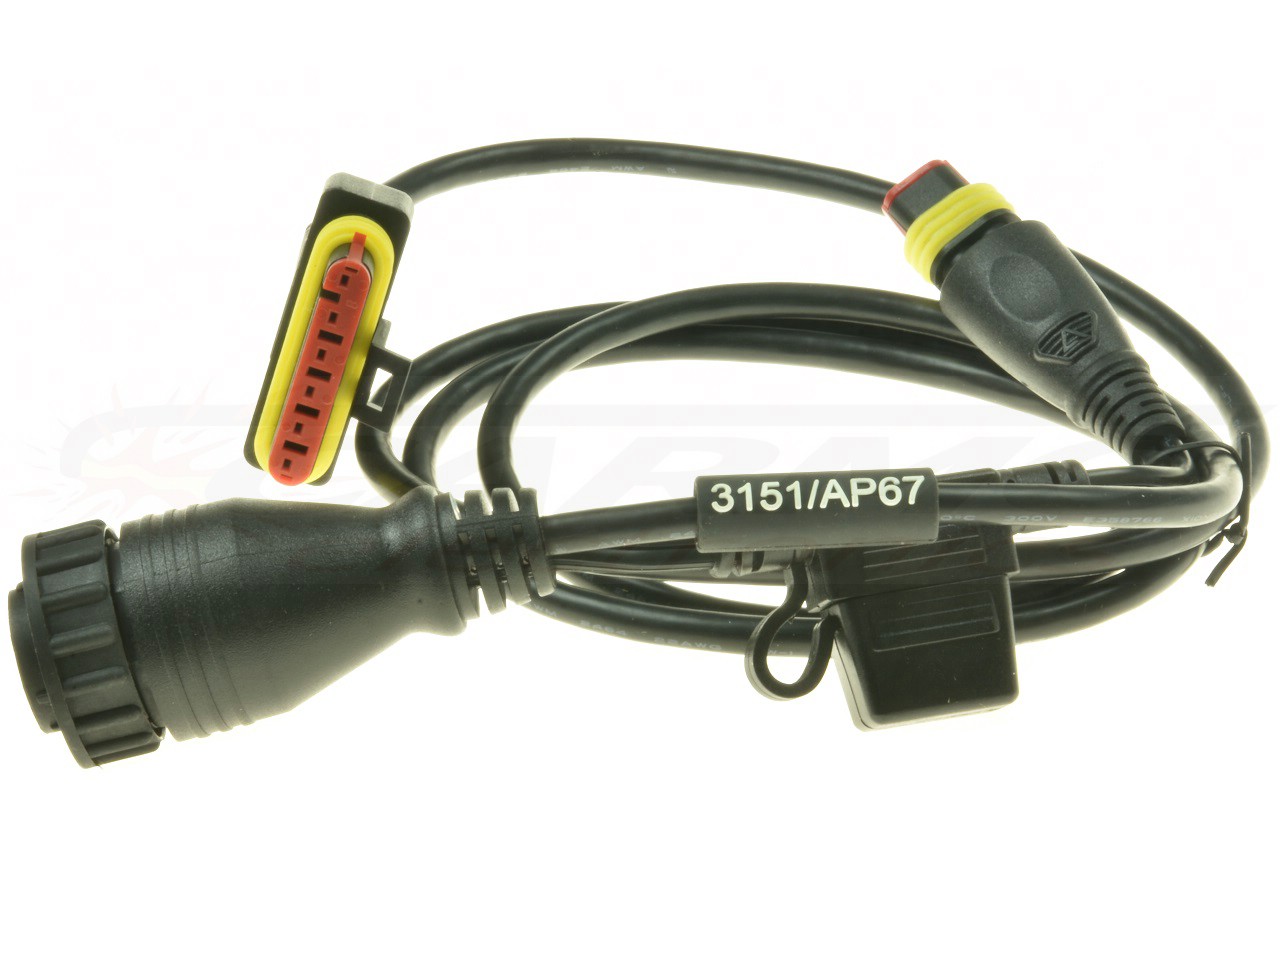 3151/AP67 Motorcycle main cable for electrically powered vehicles TEXA-3913405 - Clique na Imagem para Fechar